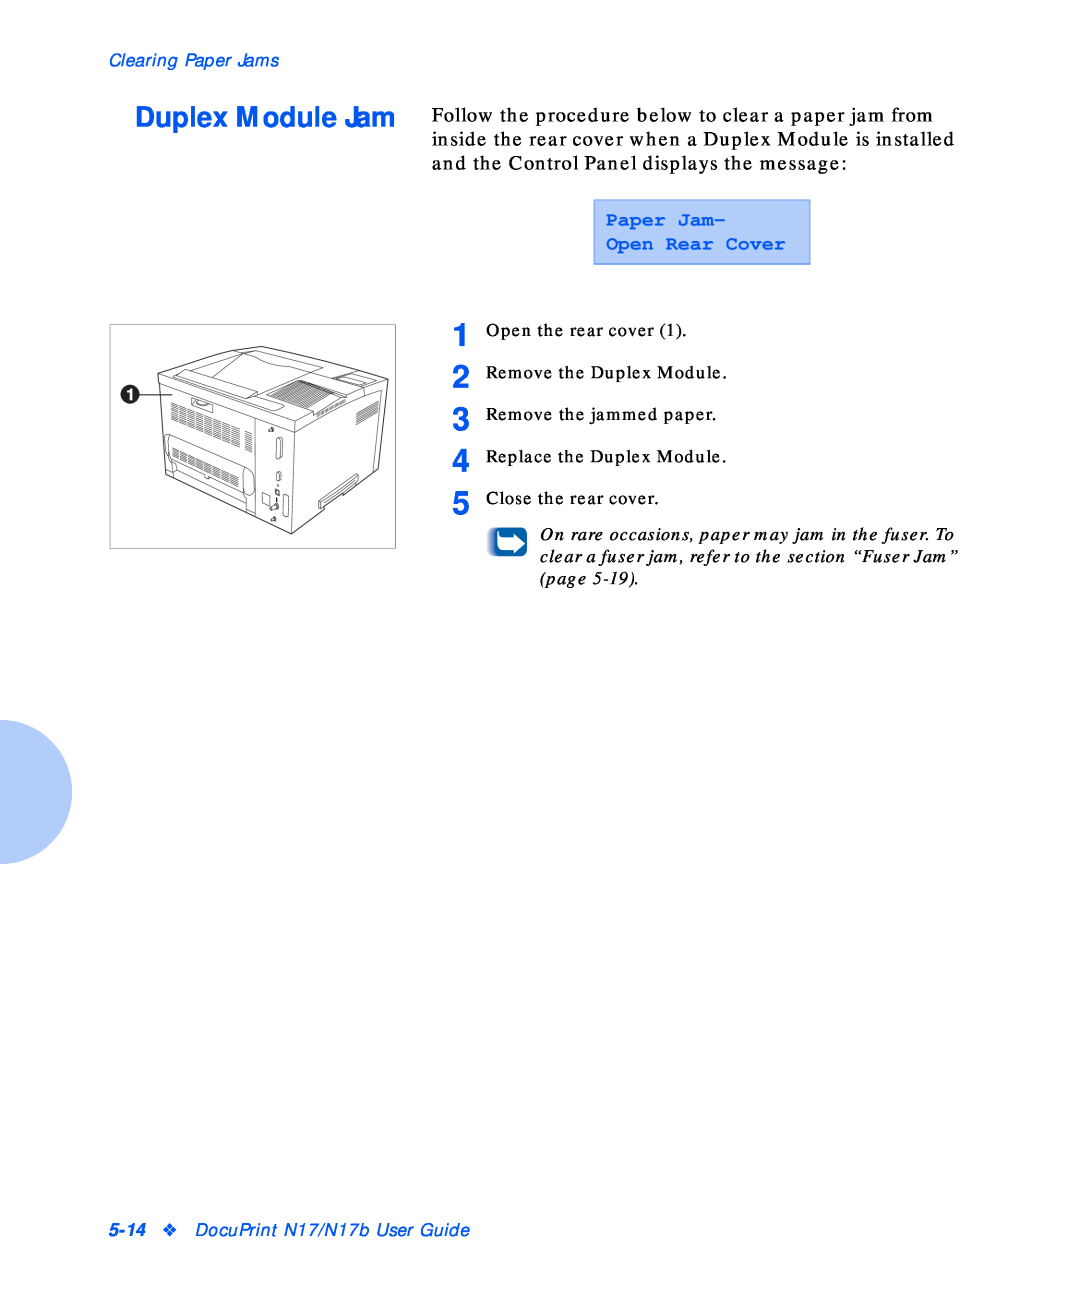 Xerox manual Duplex Module Jam, Paper Jam Open Rear Cover, Clearing Paper Jams, DocuPrint N17/N17b User Guide 